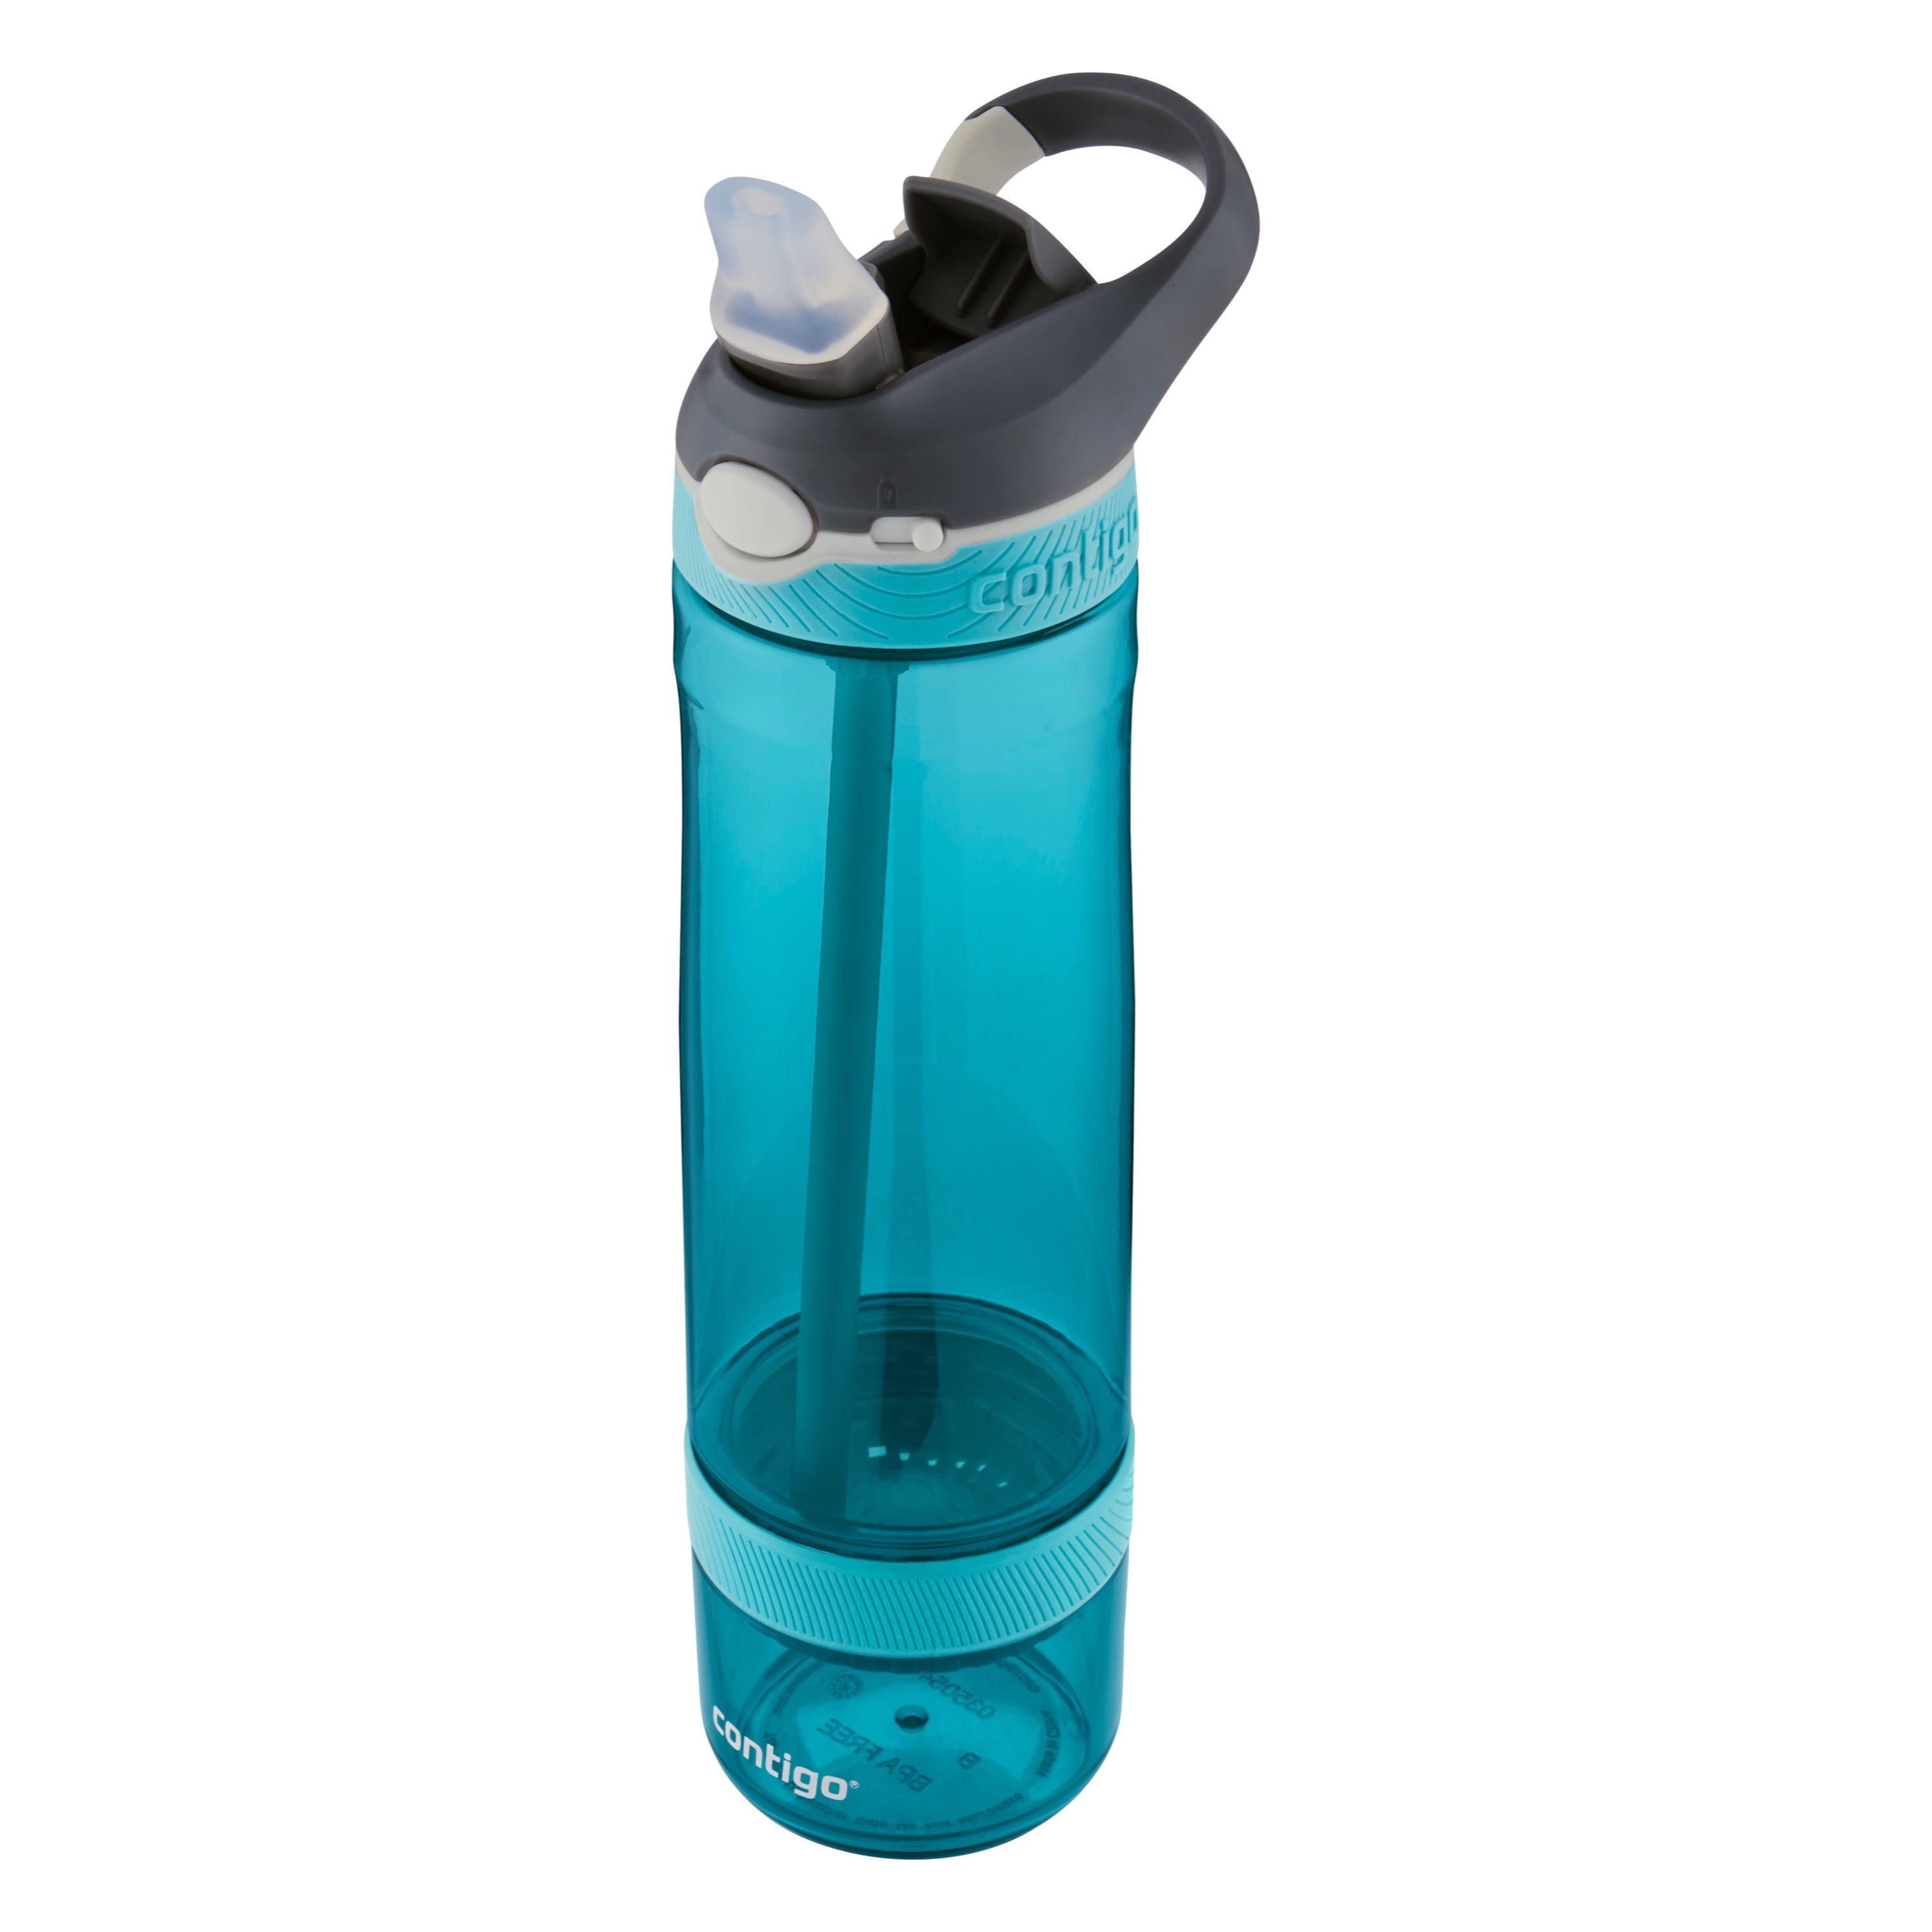 Contigo Clybourn Replacement Water Bottle Filter